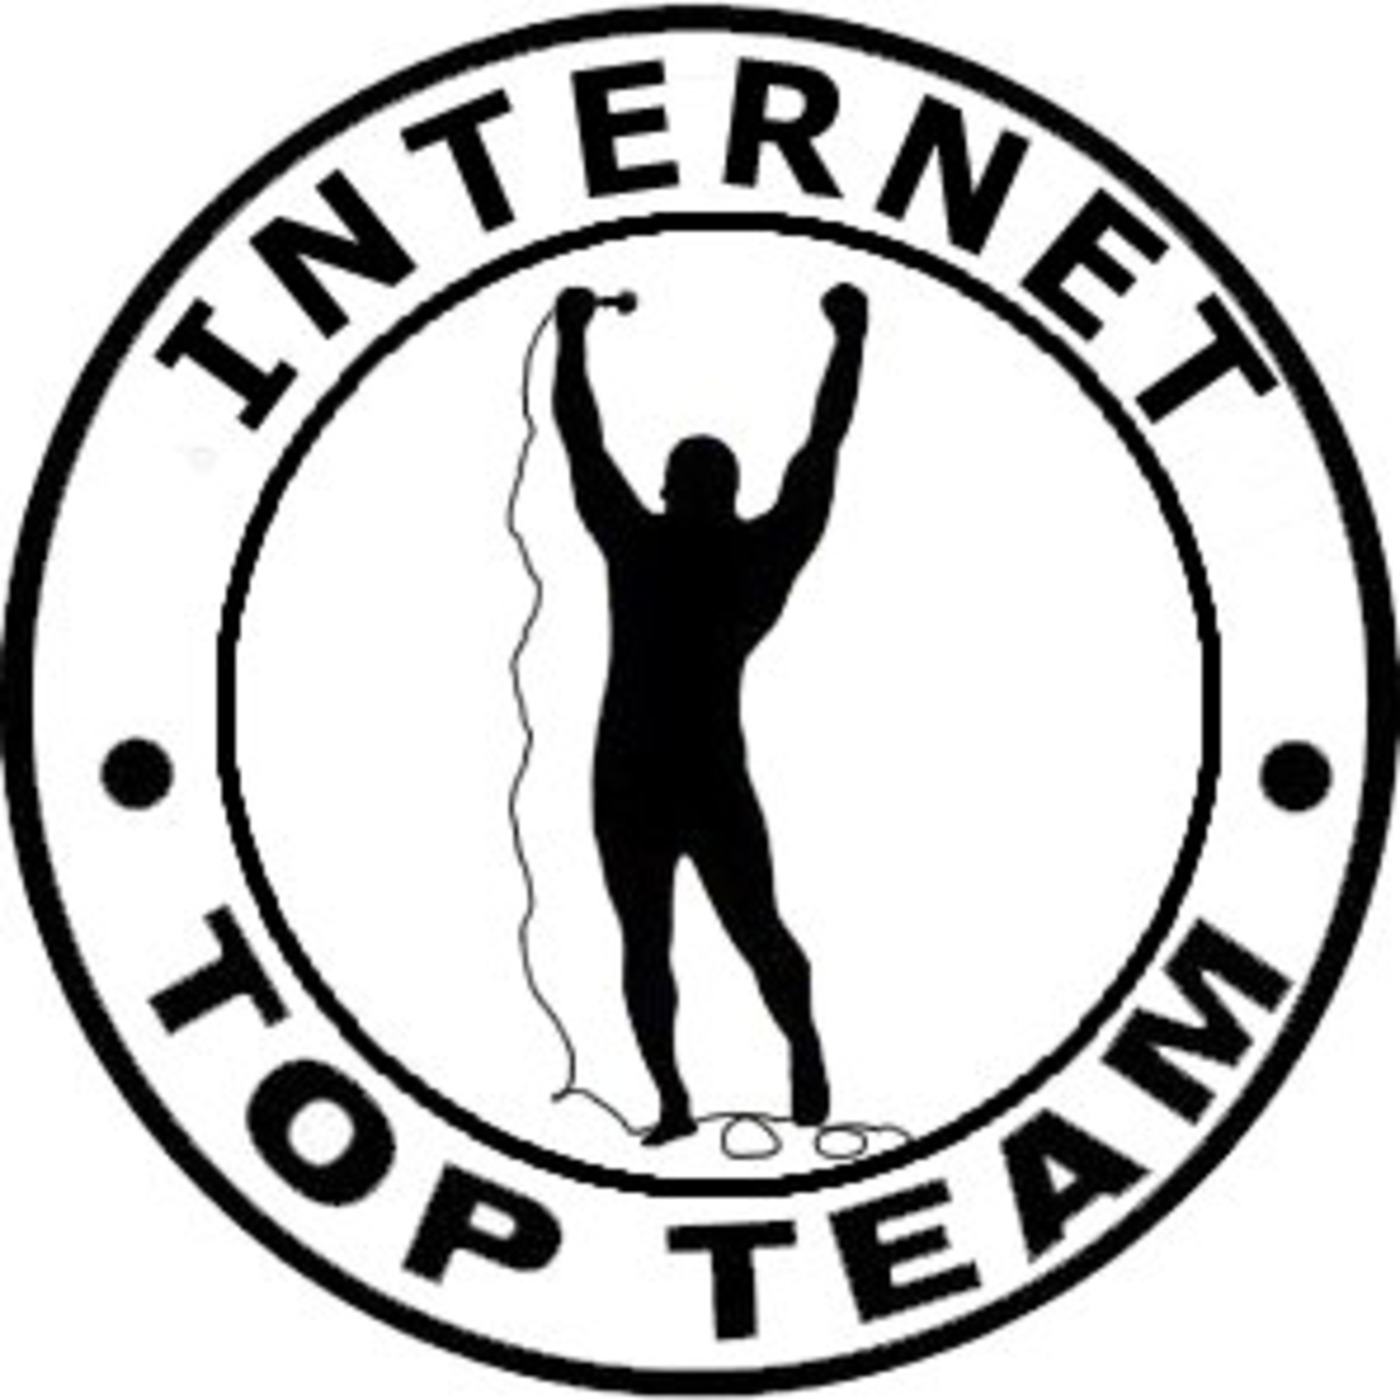 Internet Top Team!